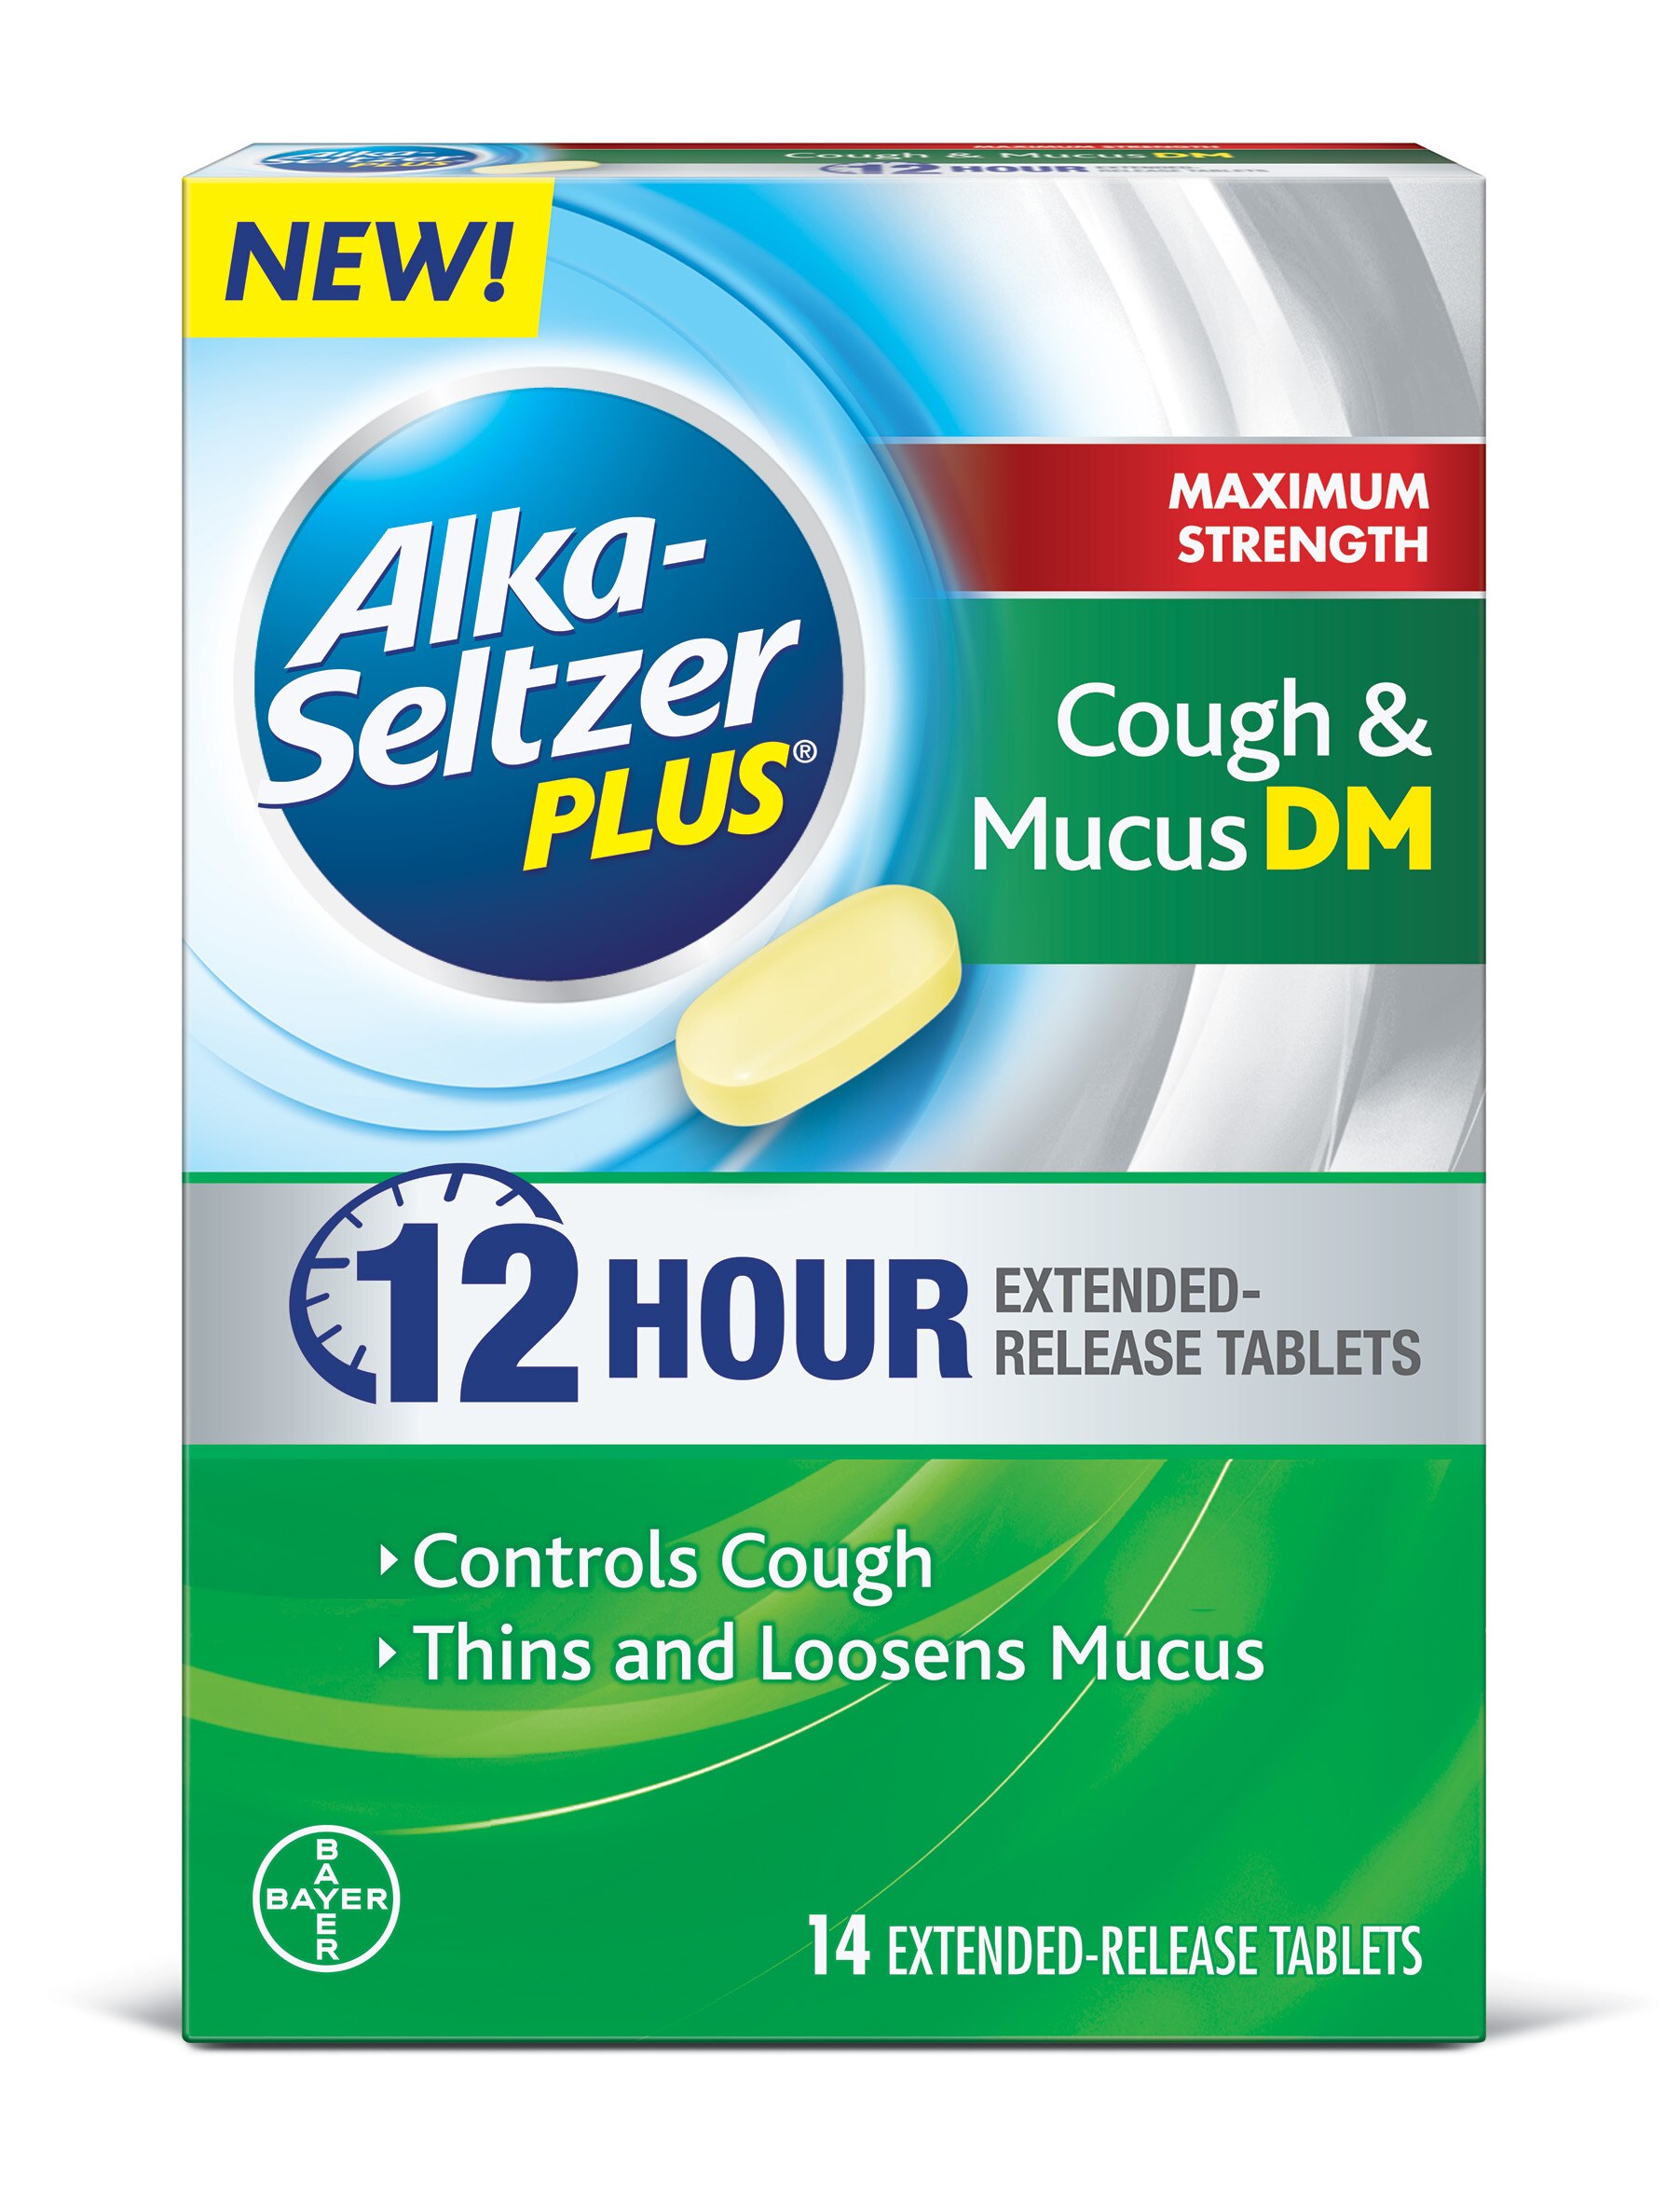 alka-seltzer-plus-maximum-strength-cough-mucus-dm-extended-release